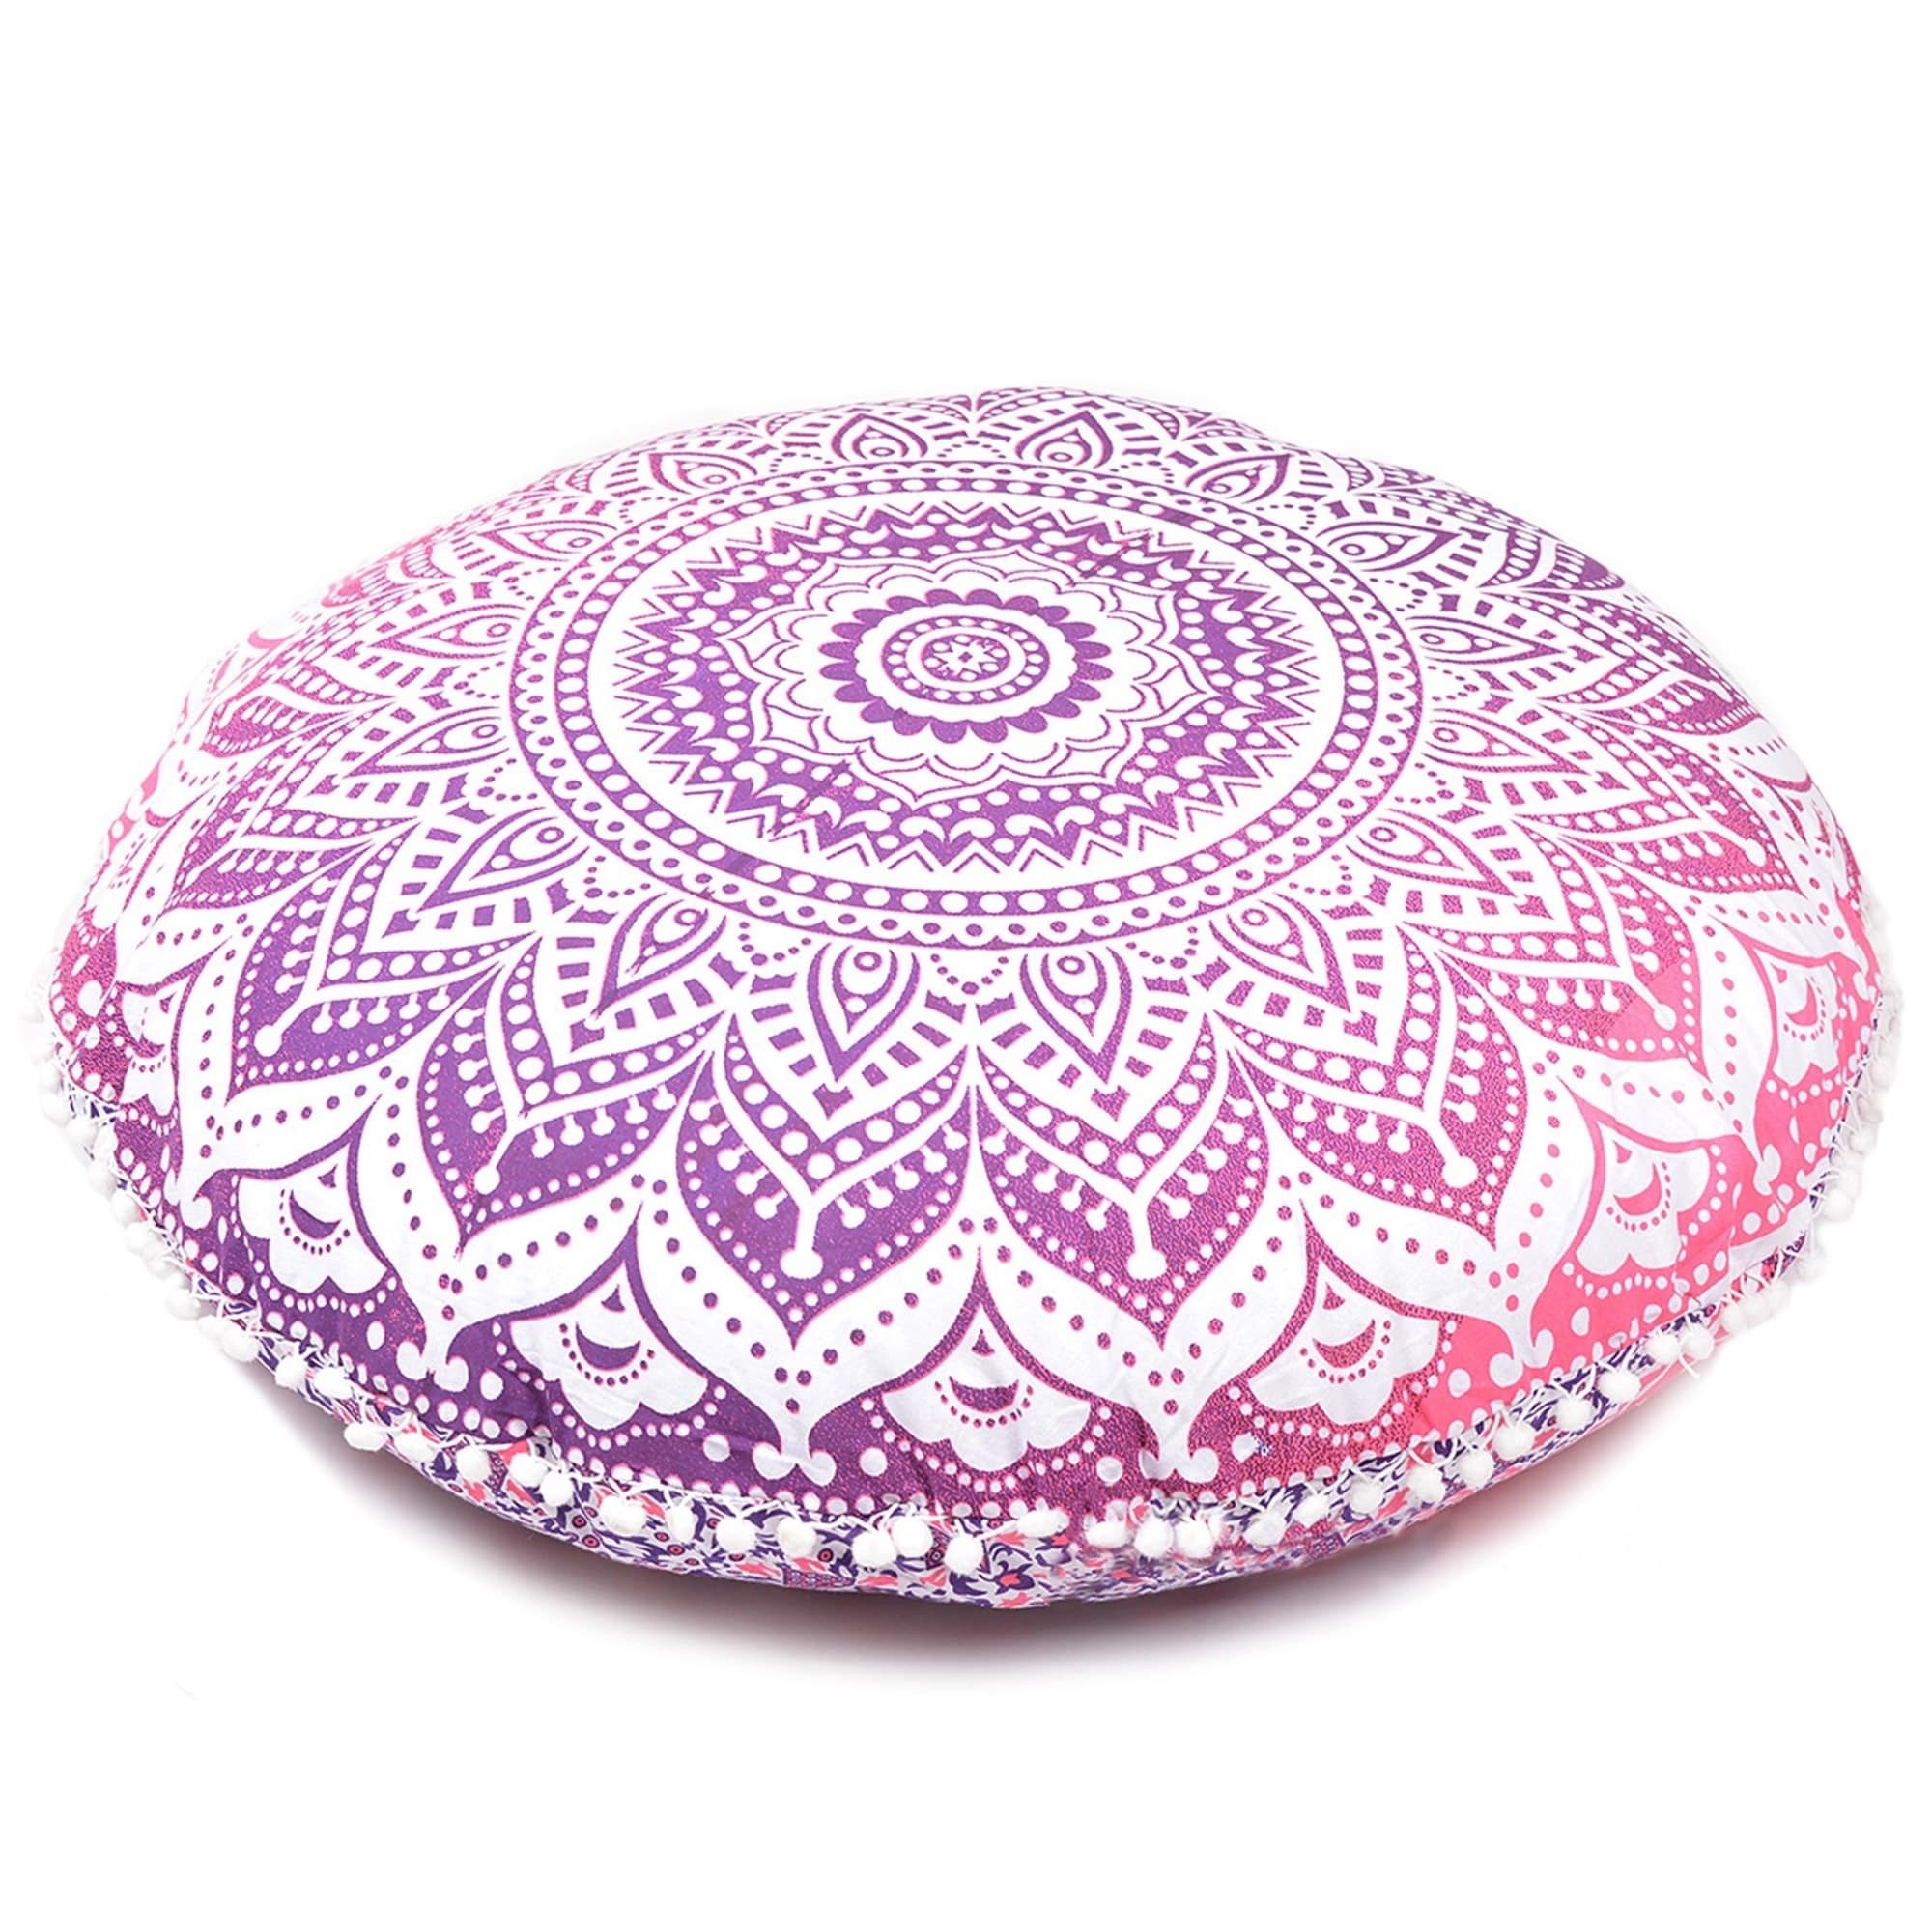 B&W Large Indian Round Floor Pillows Mandala Decor Meditation Cushion Cover 32" 